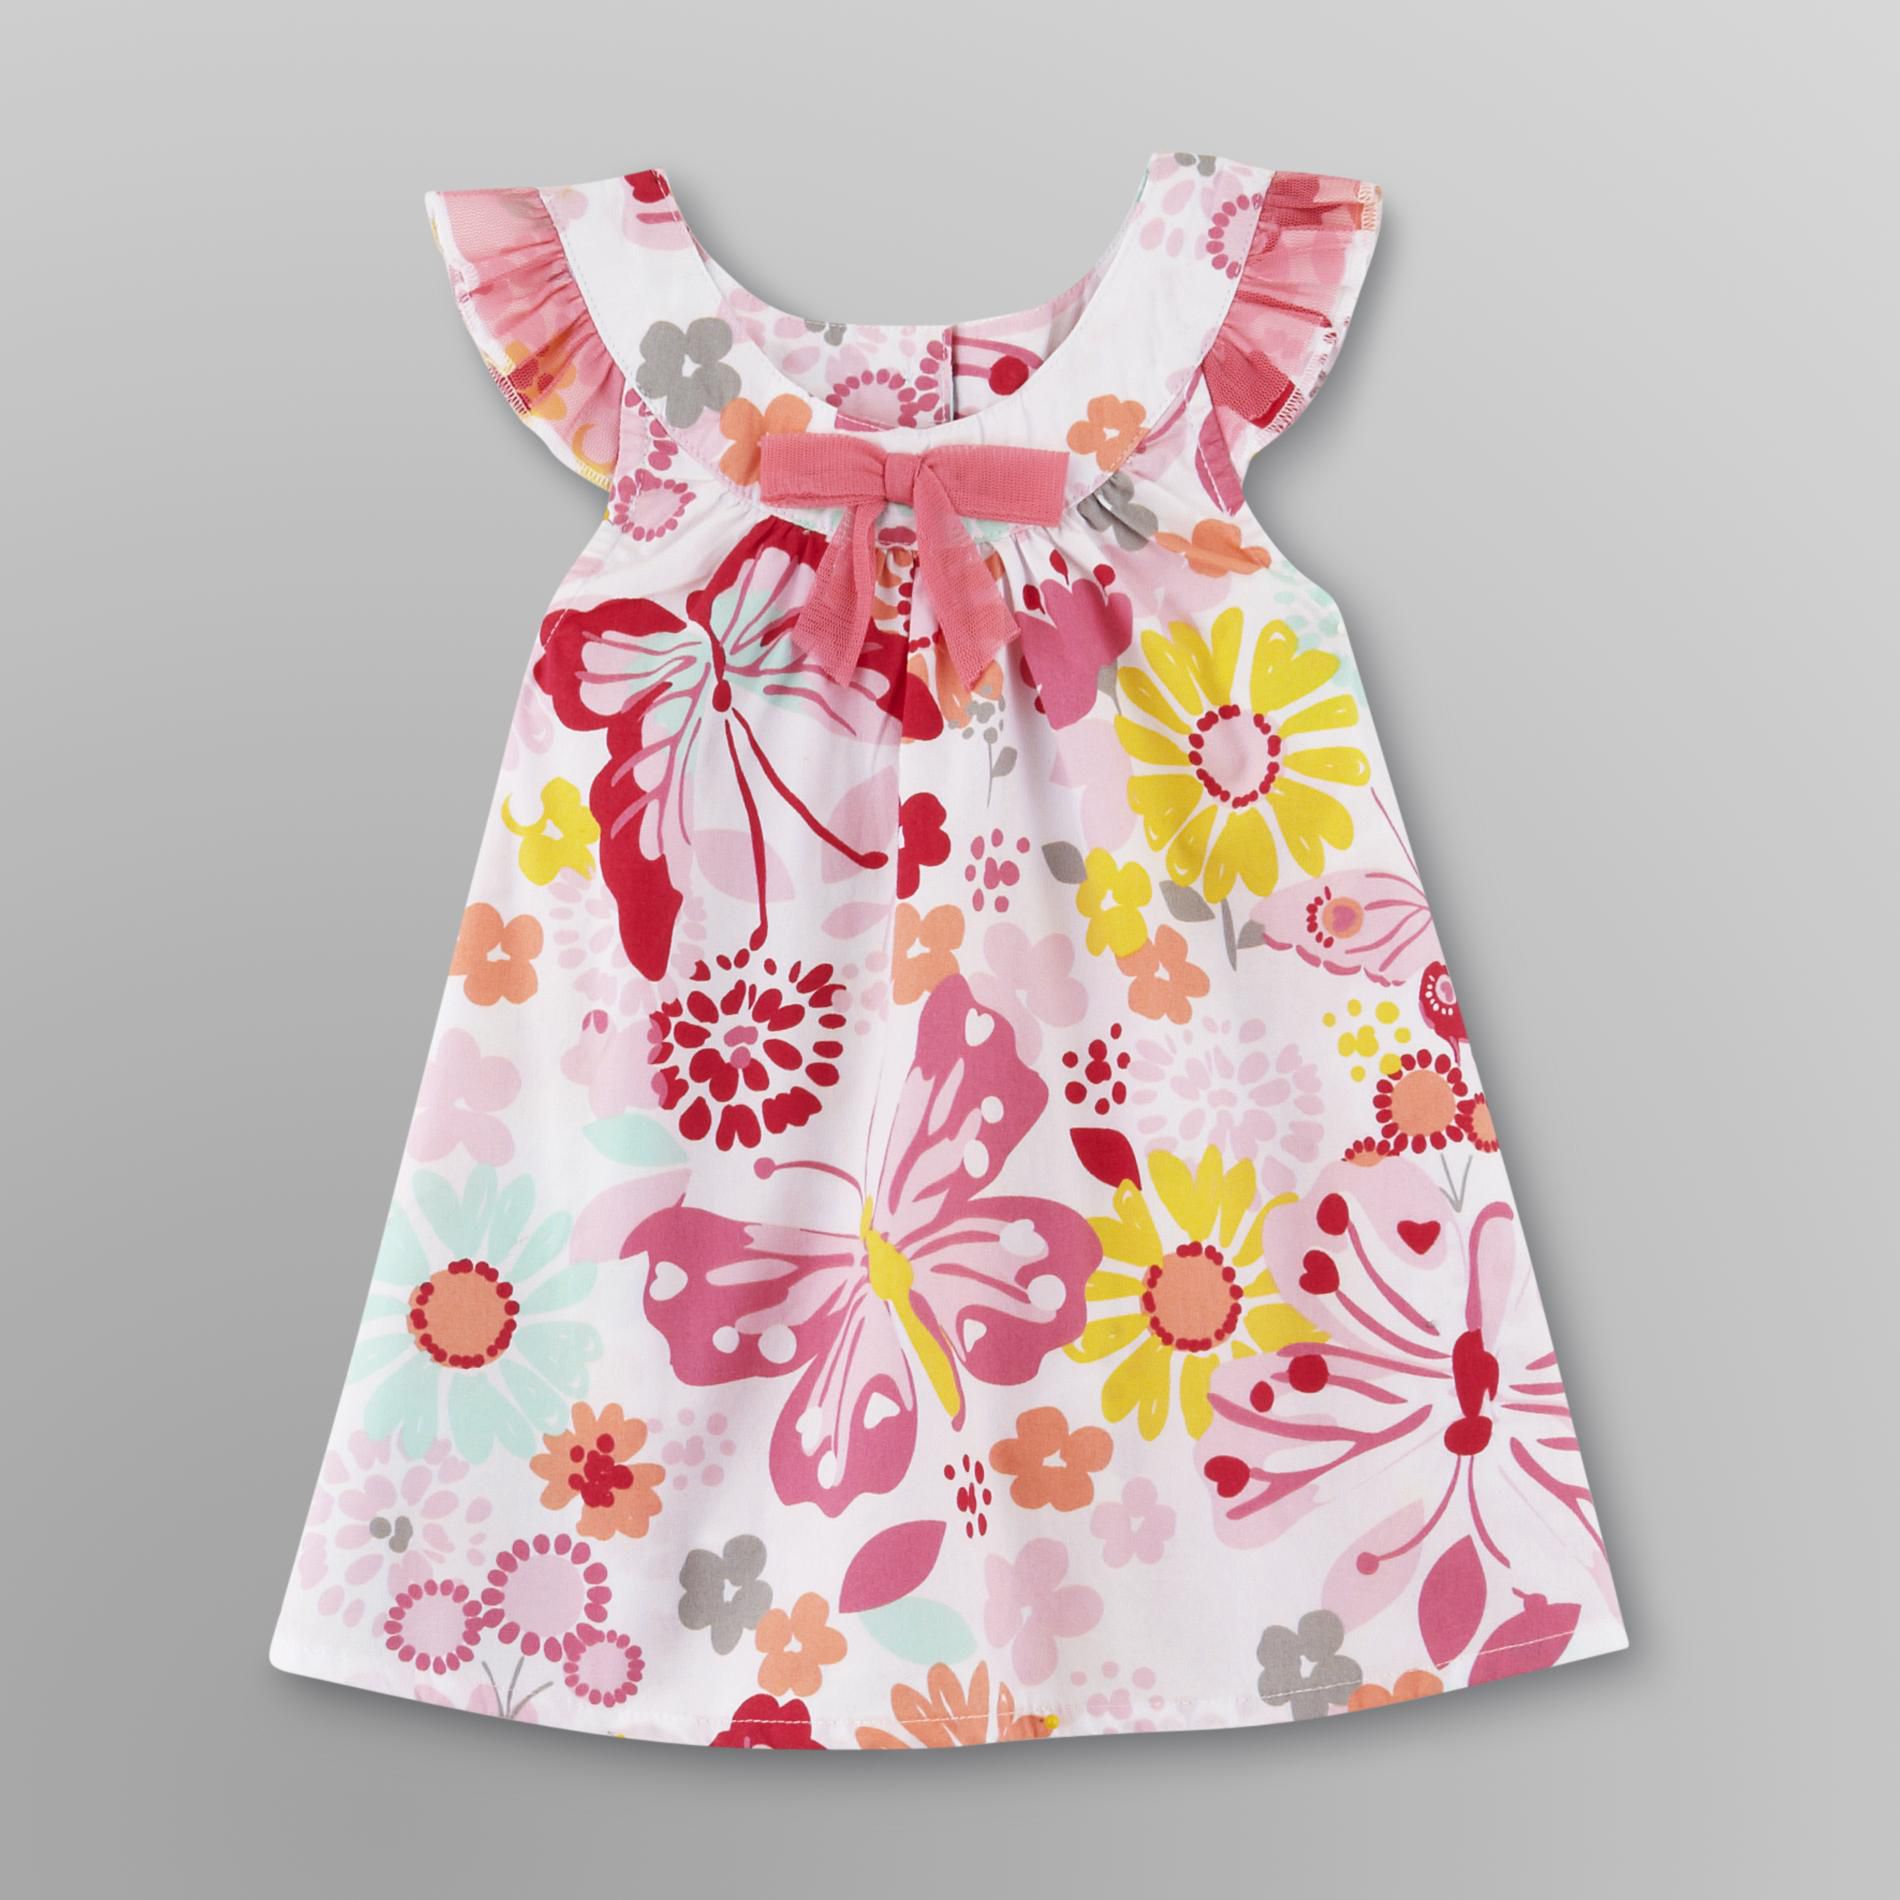 WonderKids Infant & Toddler Girl's Ruffle Top - Butterfly